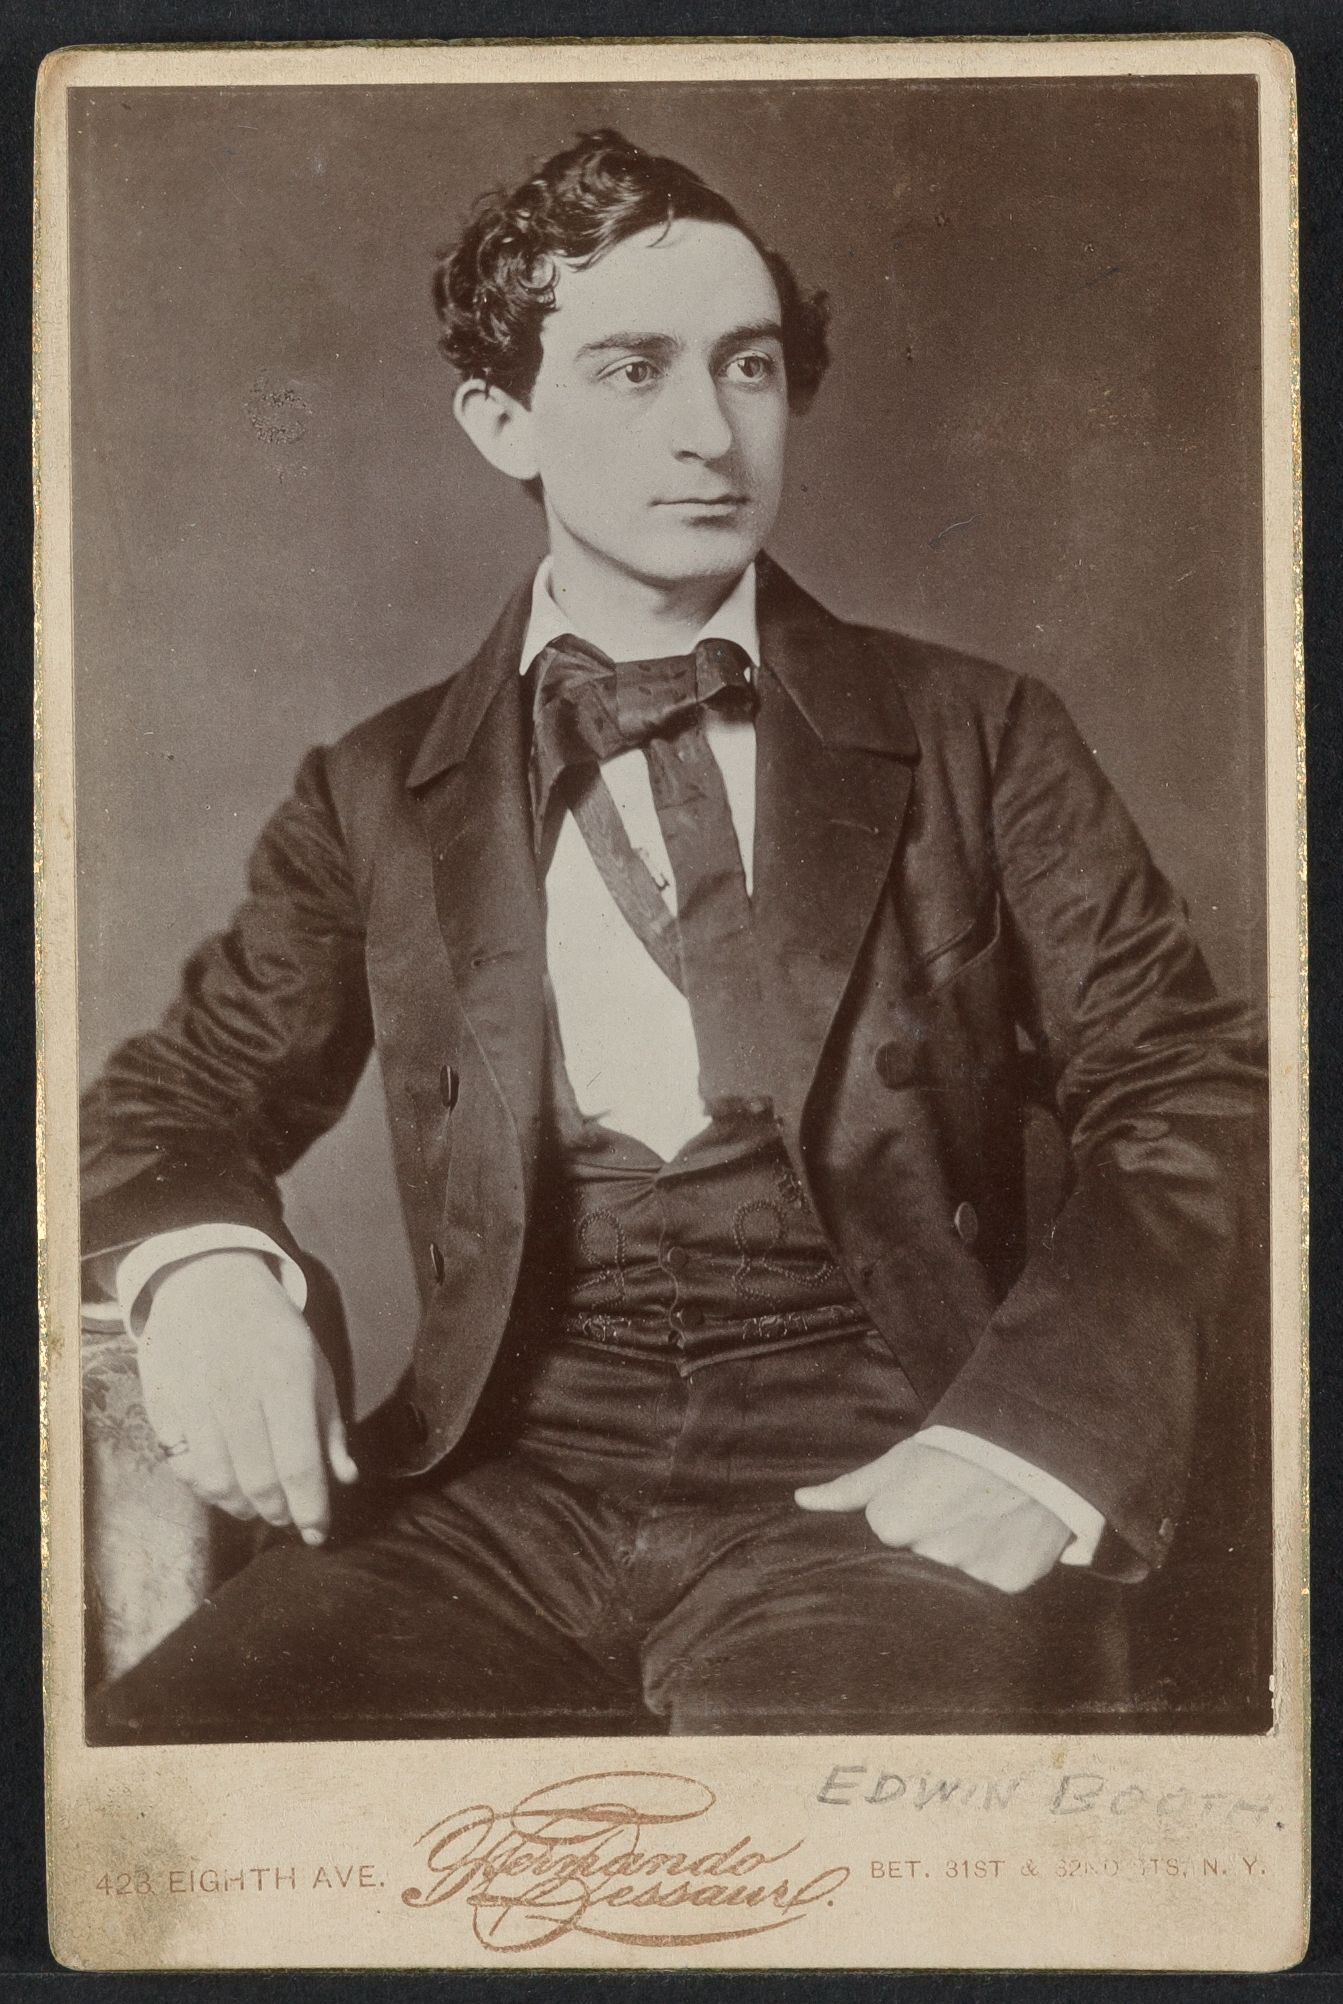 Edwin Booth in an 1856 photograph